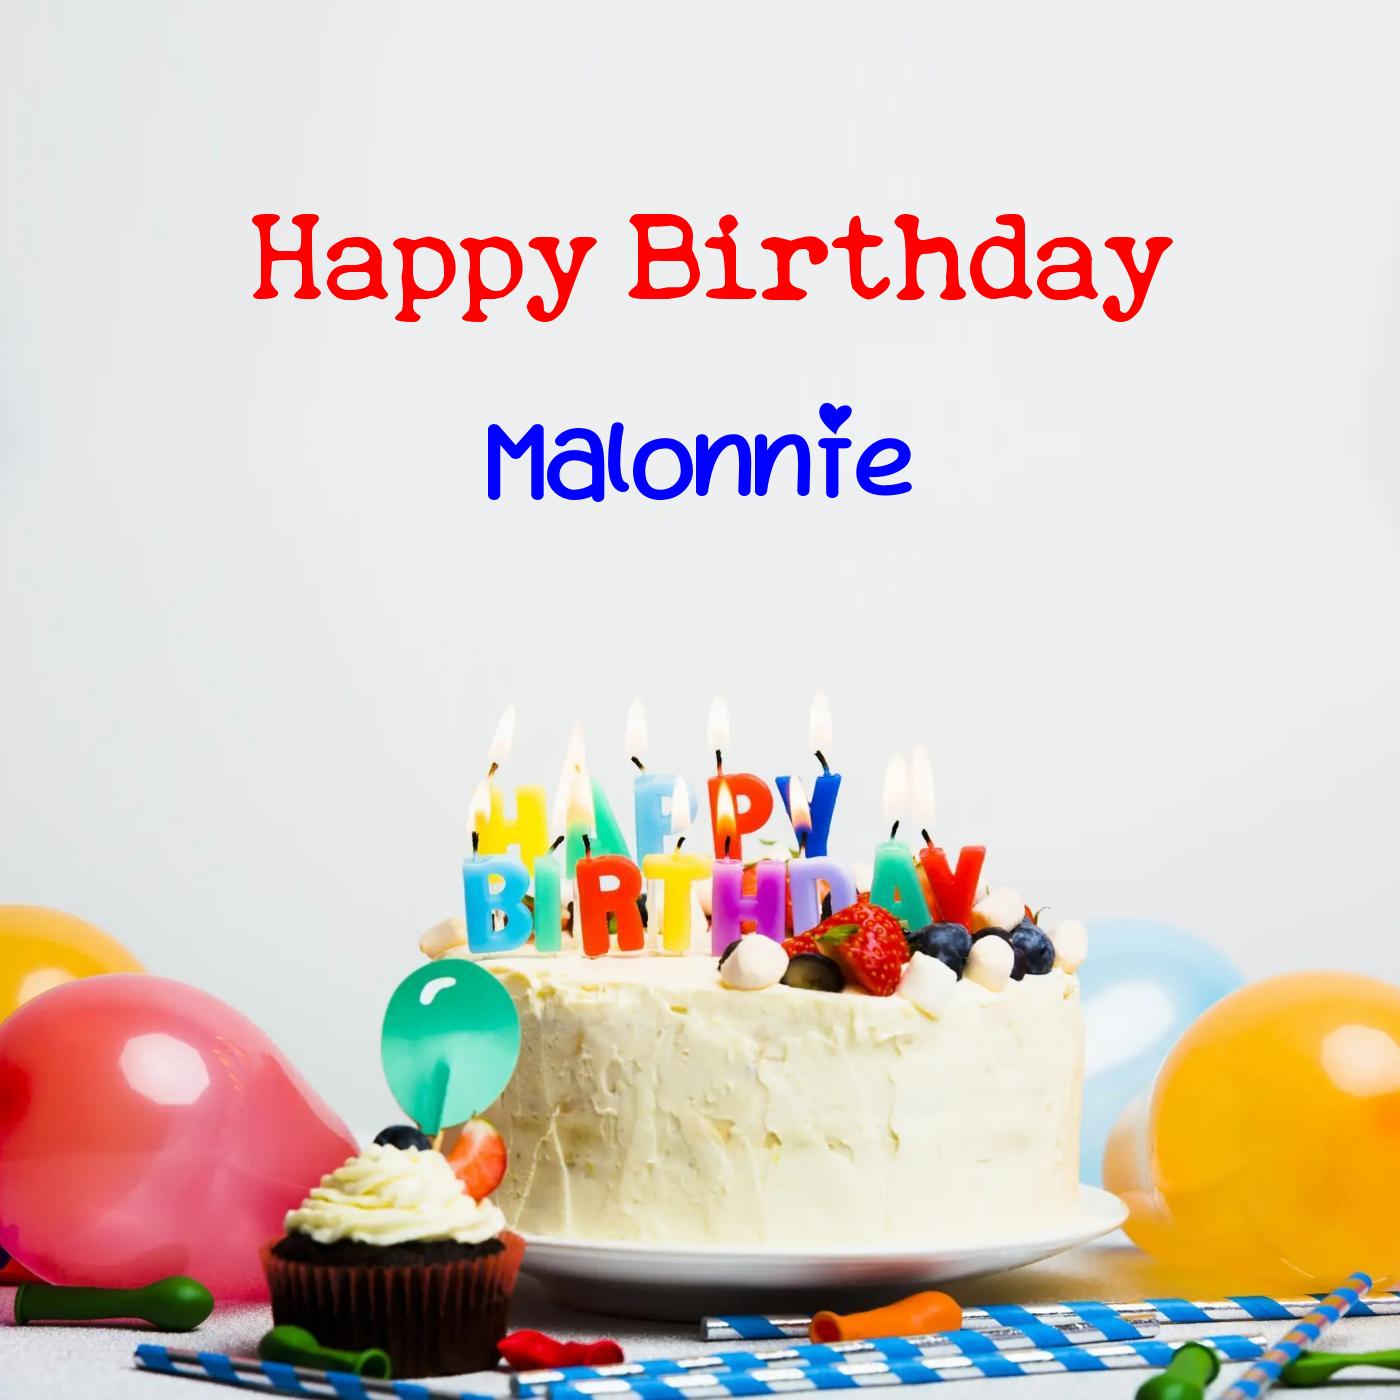 Happy Birthday Malonnie Cake Balloons Card